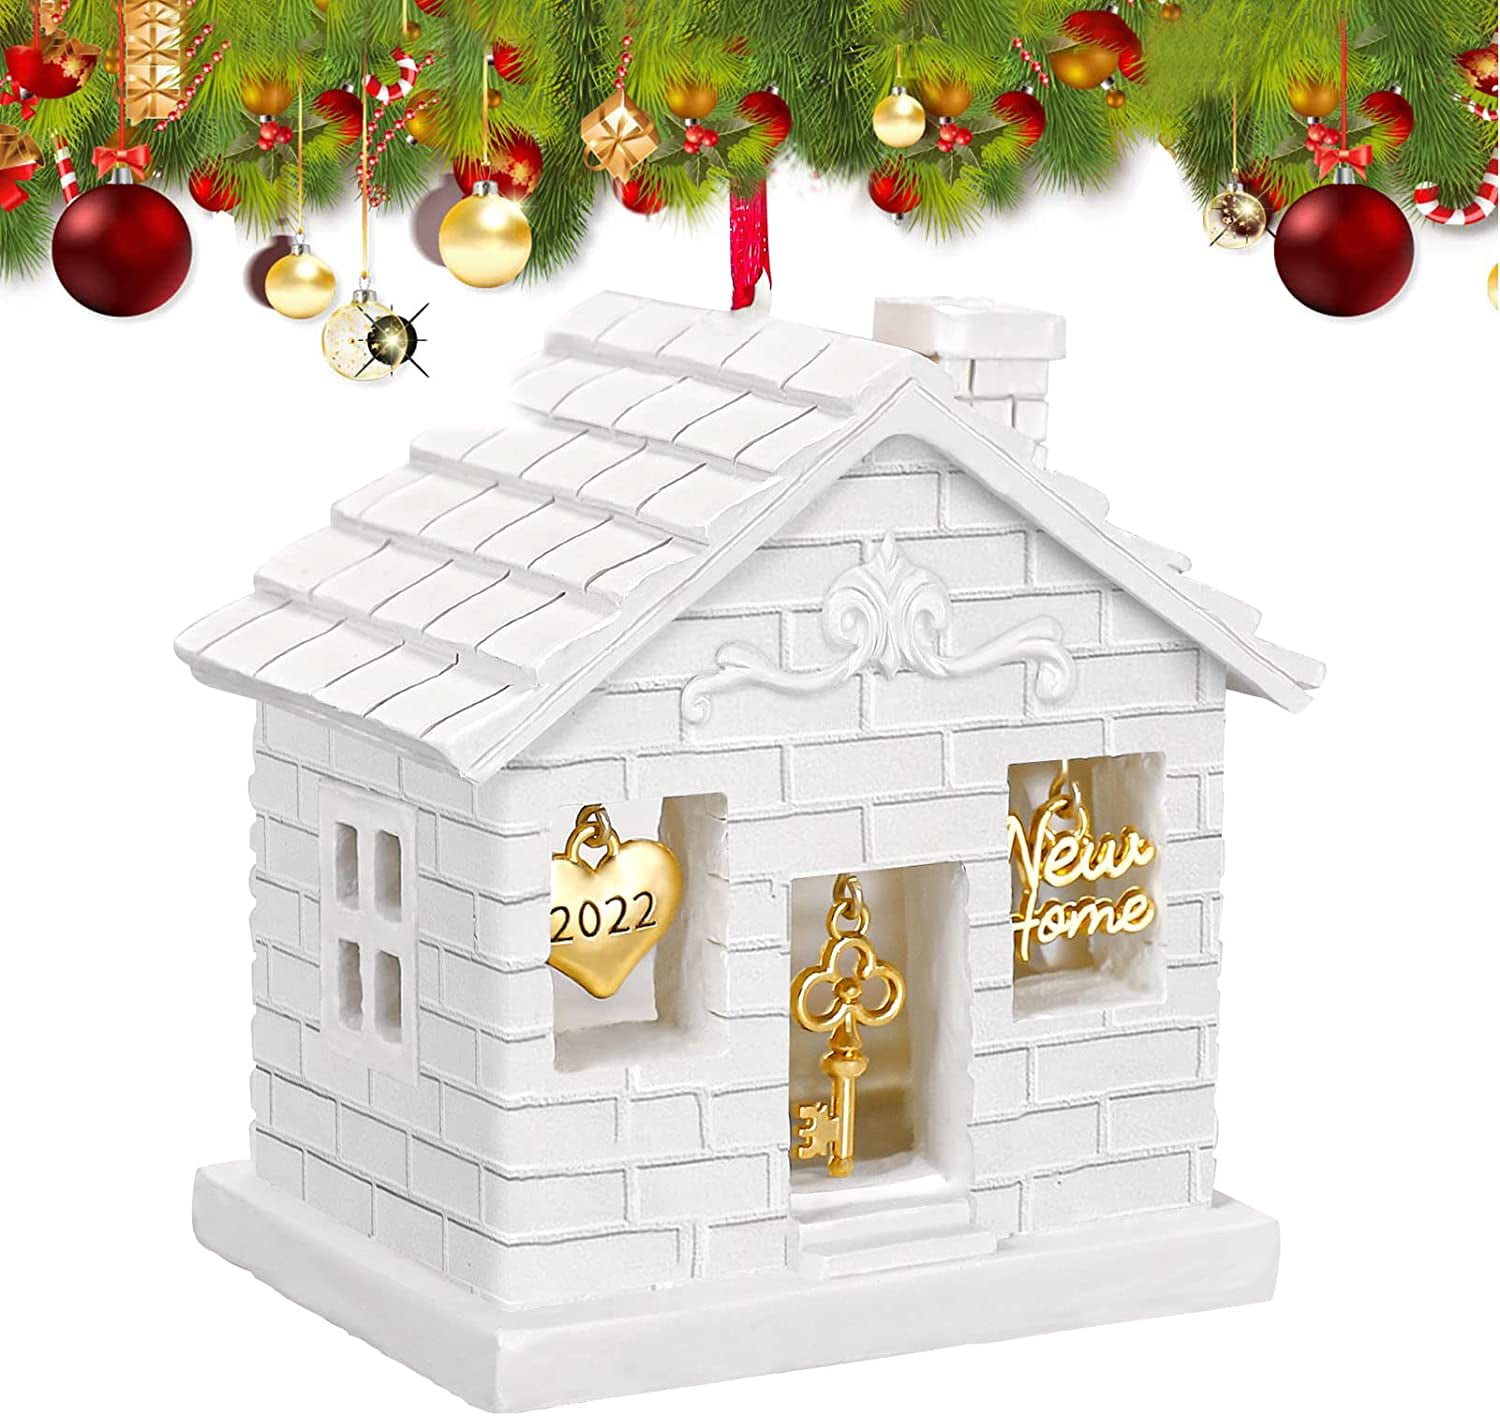 2022 New Home Christmas Ornament, Housewarming Gift, New Home Gifts for  Home Decor - House Warming Presents for New Home Funny, Housewarming Gifts/2022  New Home (3d) 